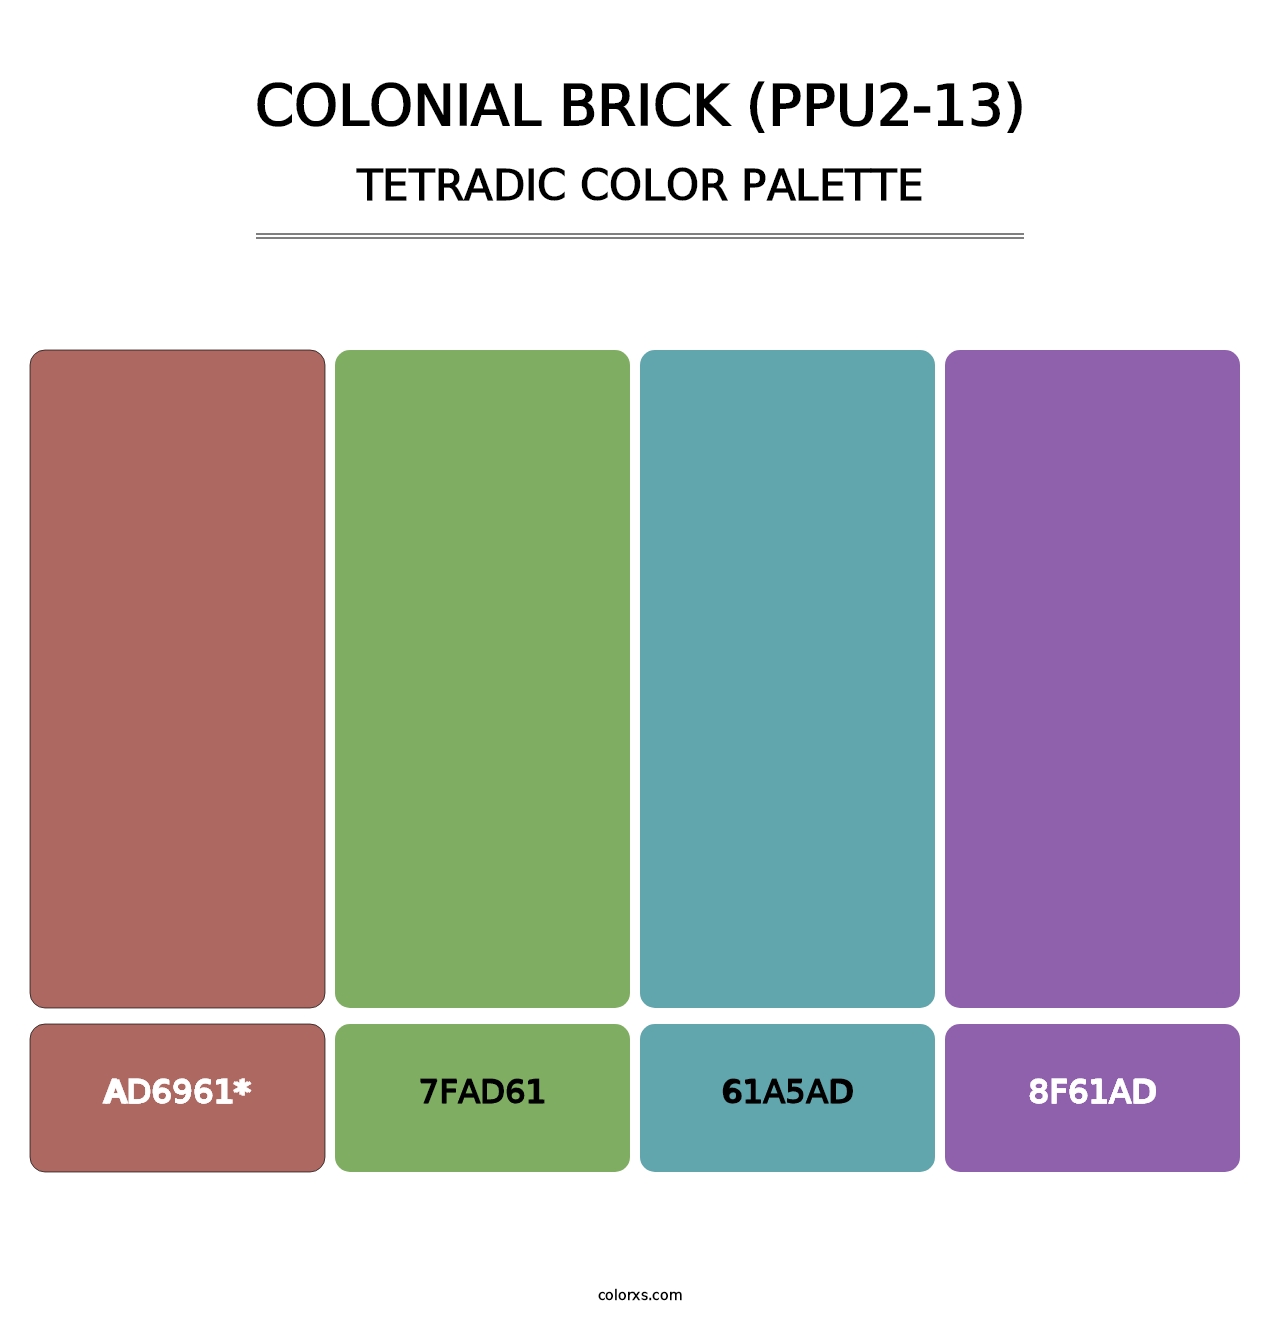 Colonial Brick (PPU2-13) - Tetradic Color Palette